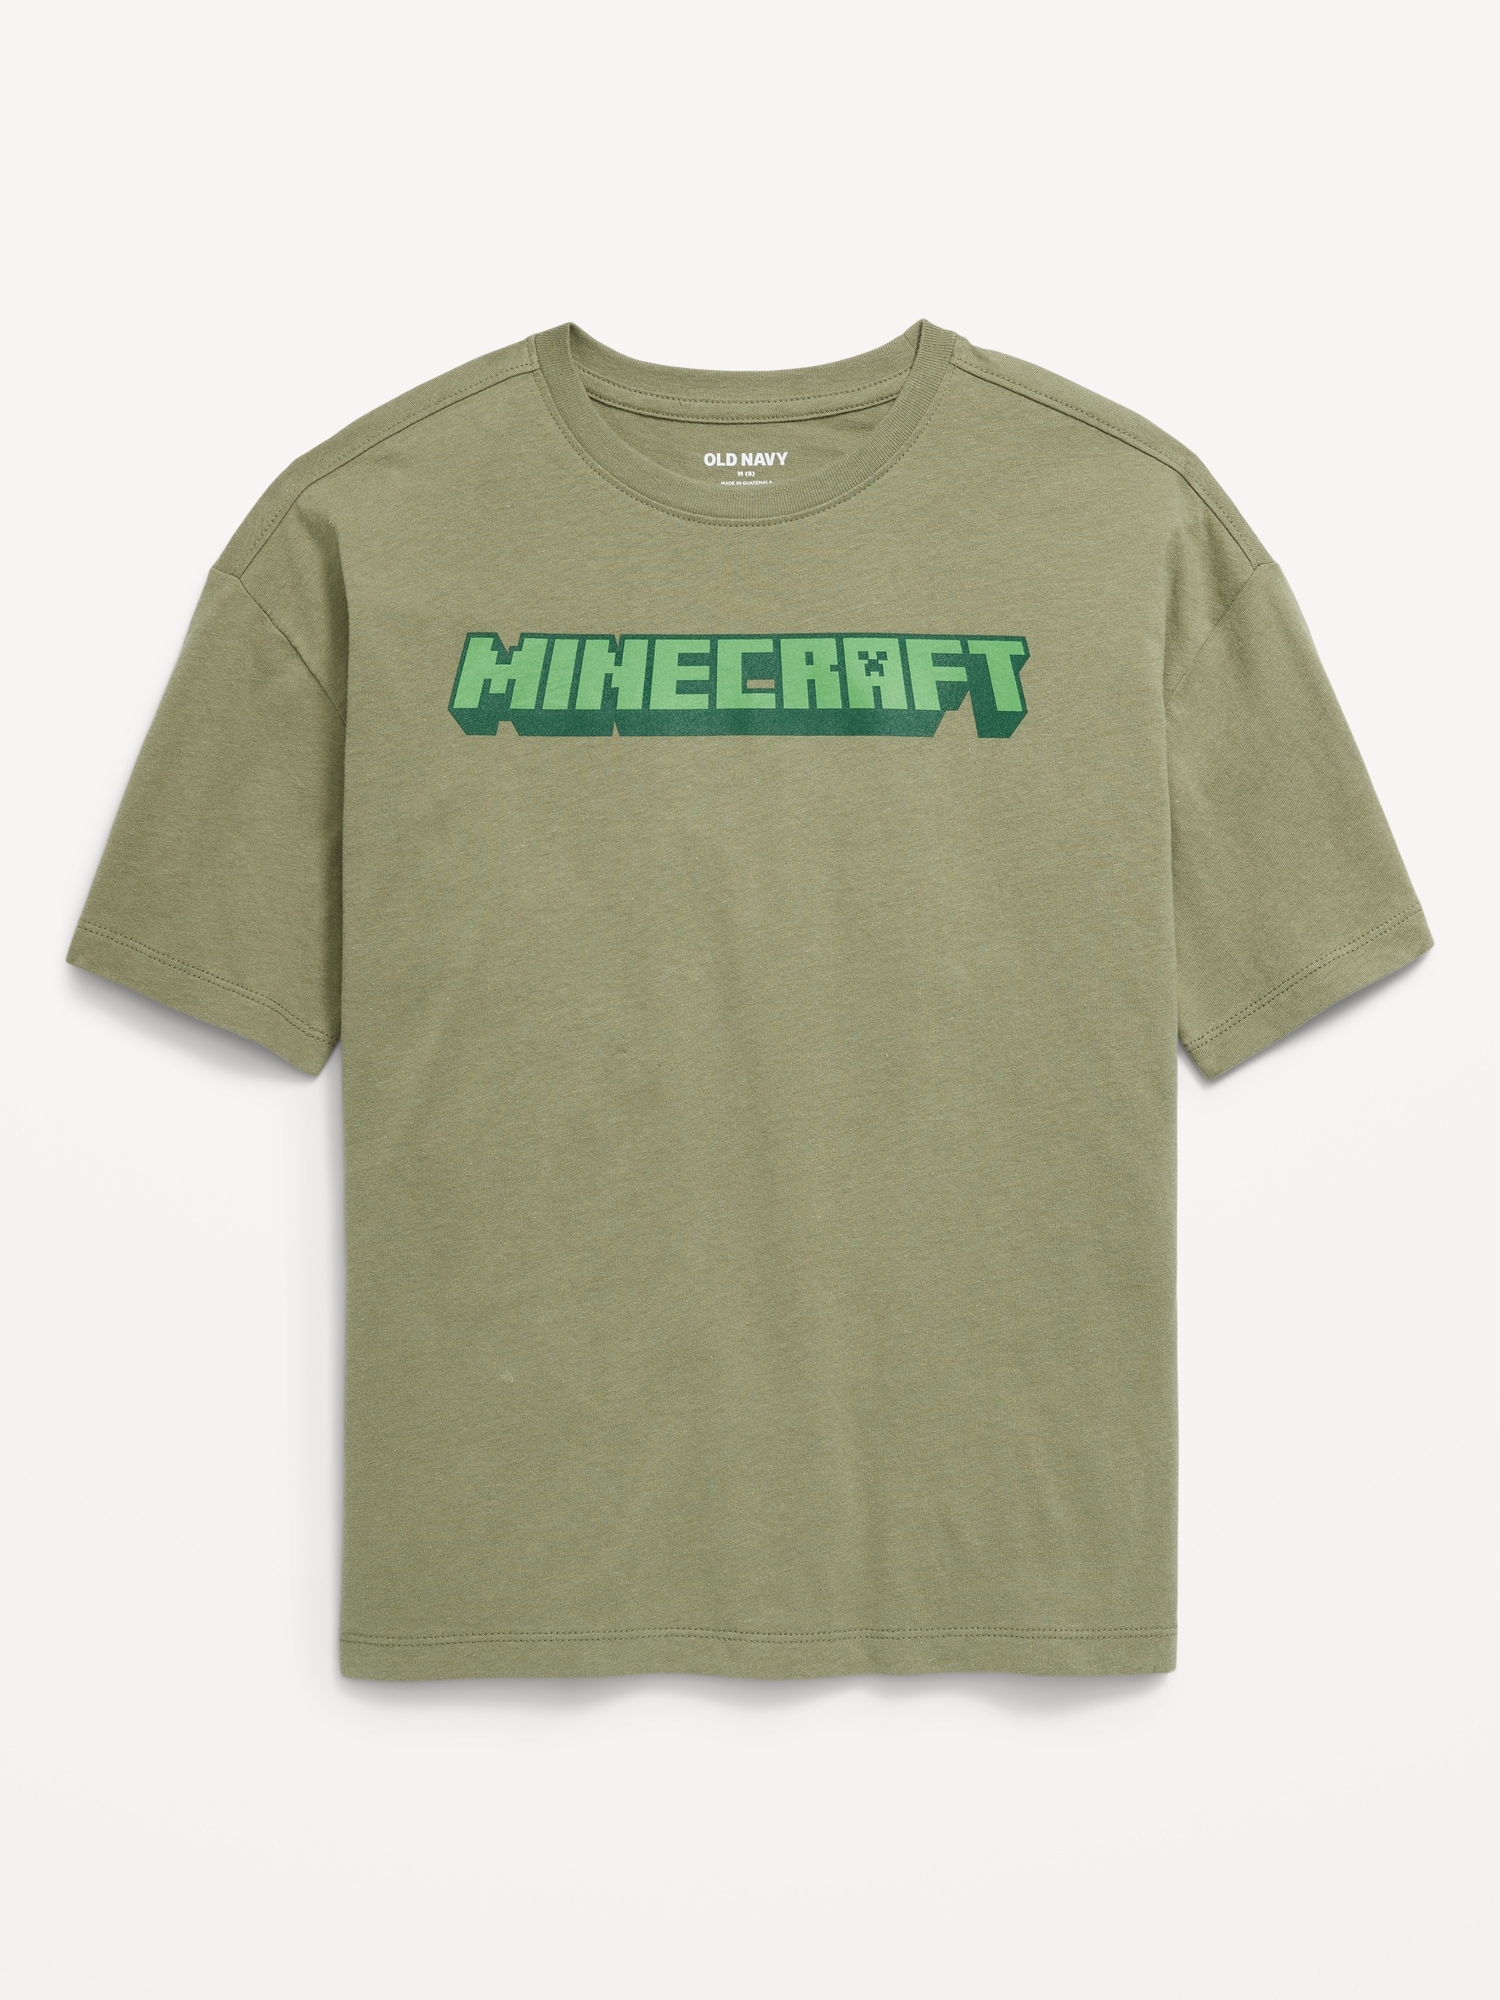 Minecraft Oversized Gender-Neutral Graphic T-Shirt for Kids